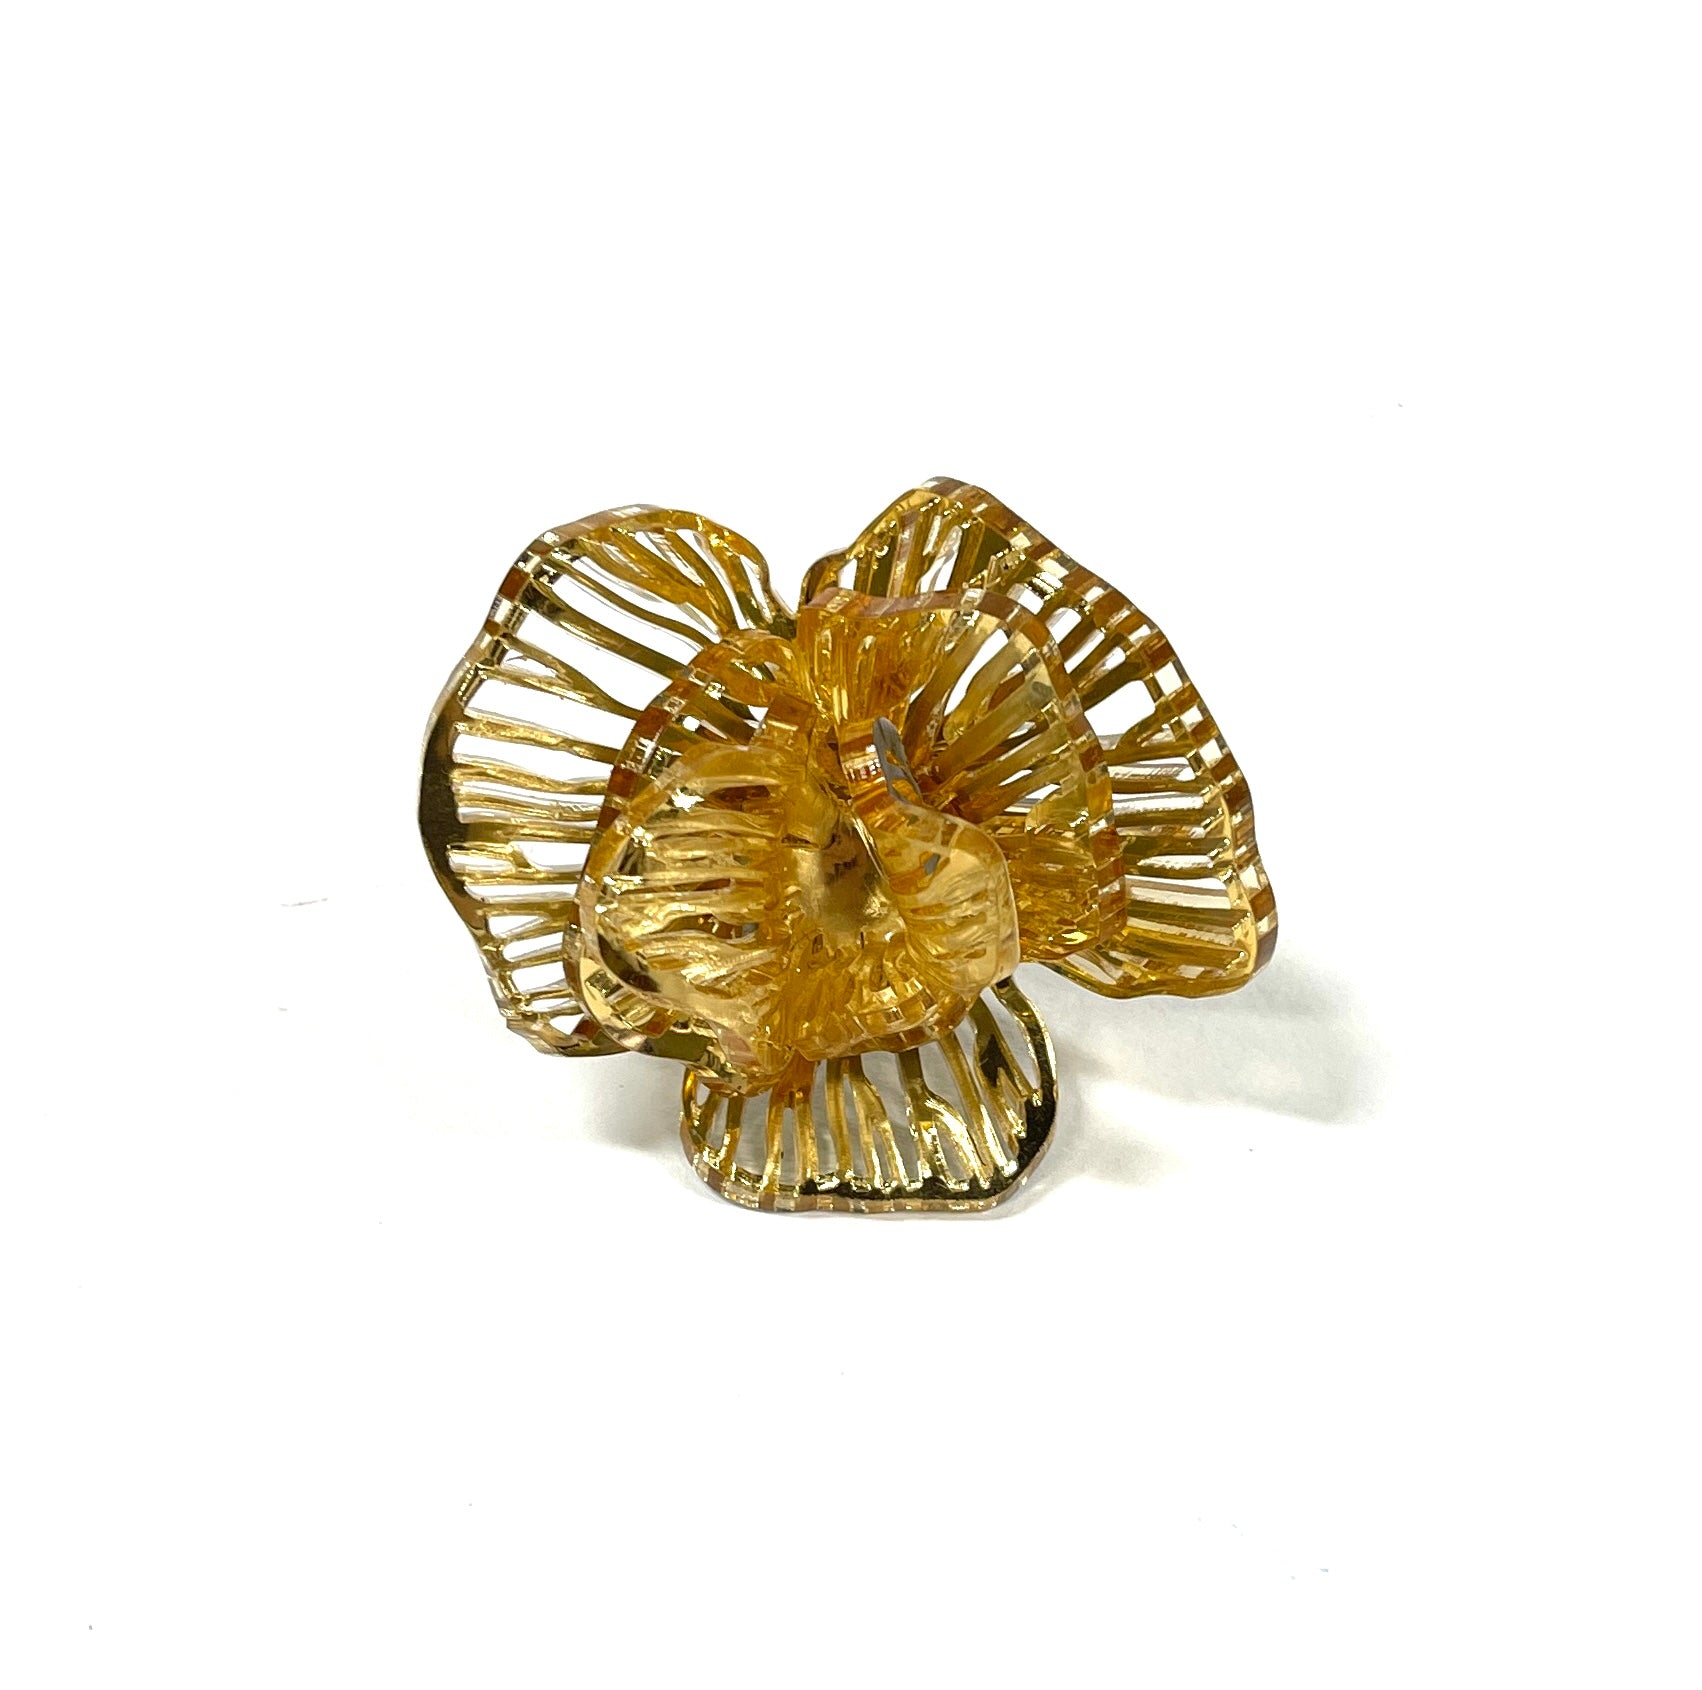 acrylic jewelry - bloom ring - gold mirror